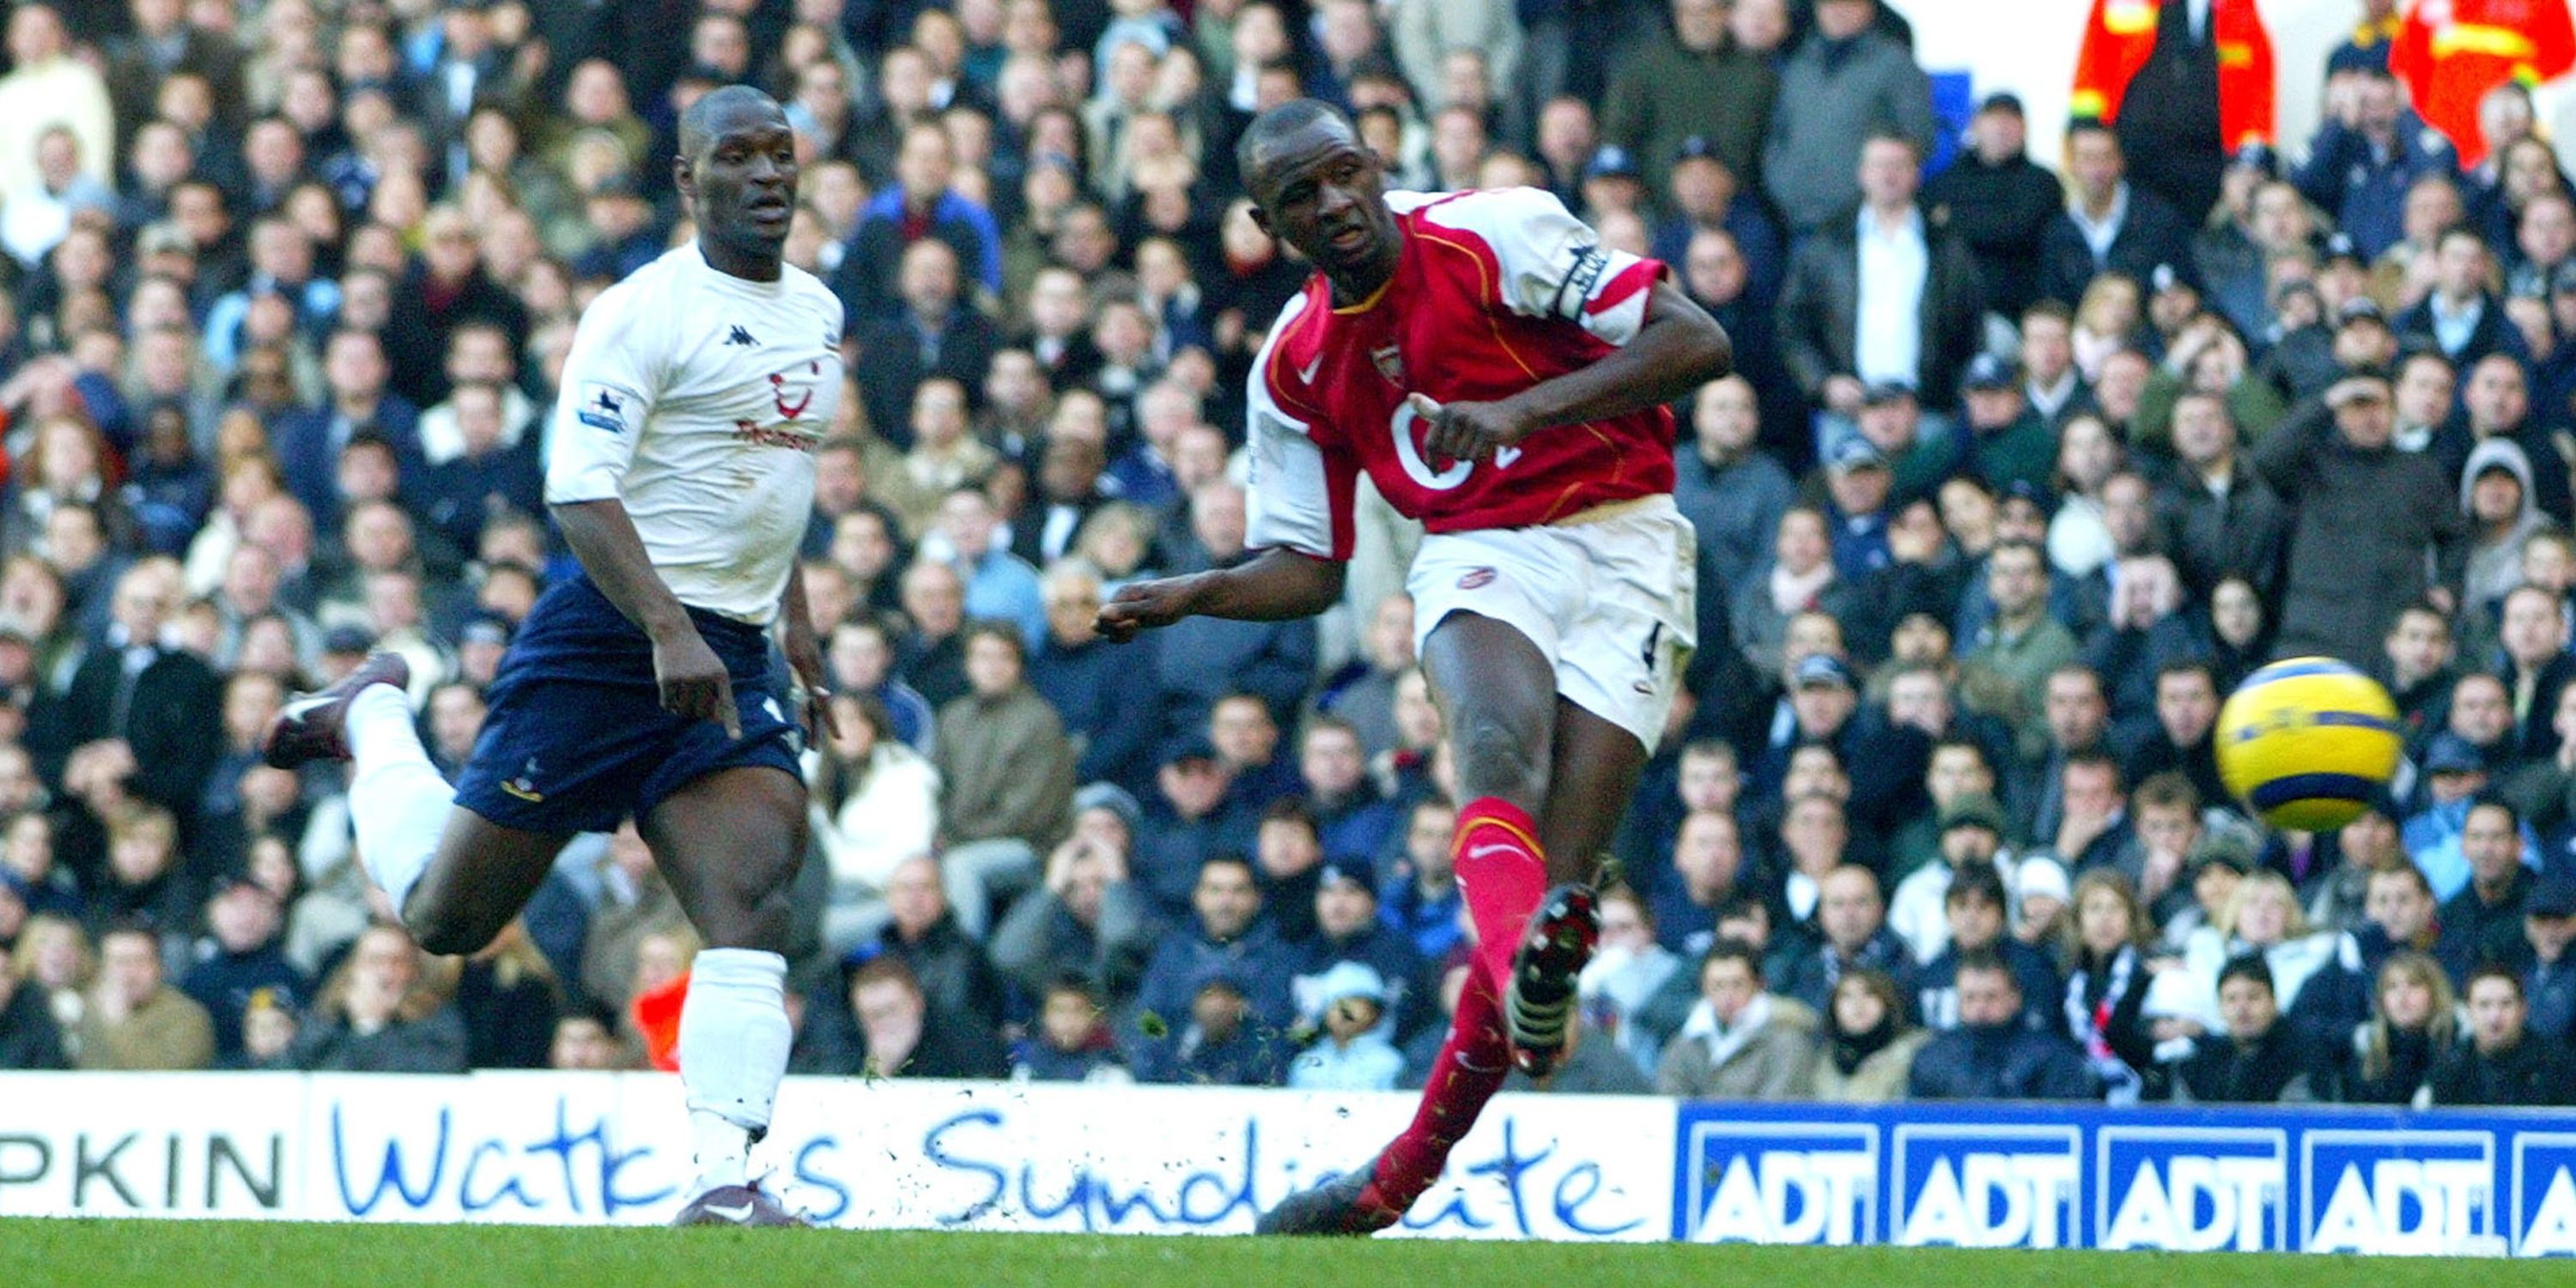 Arsenal's Patrick Vieira scores against Tottenham Hotspur. 